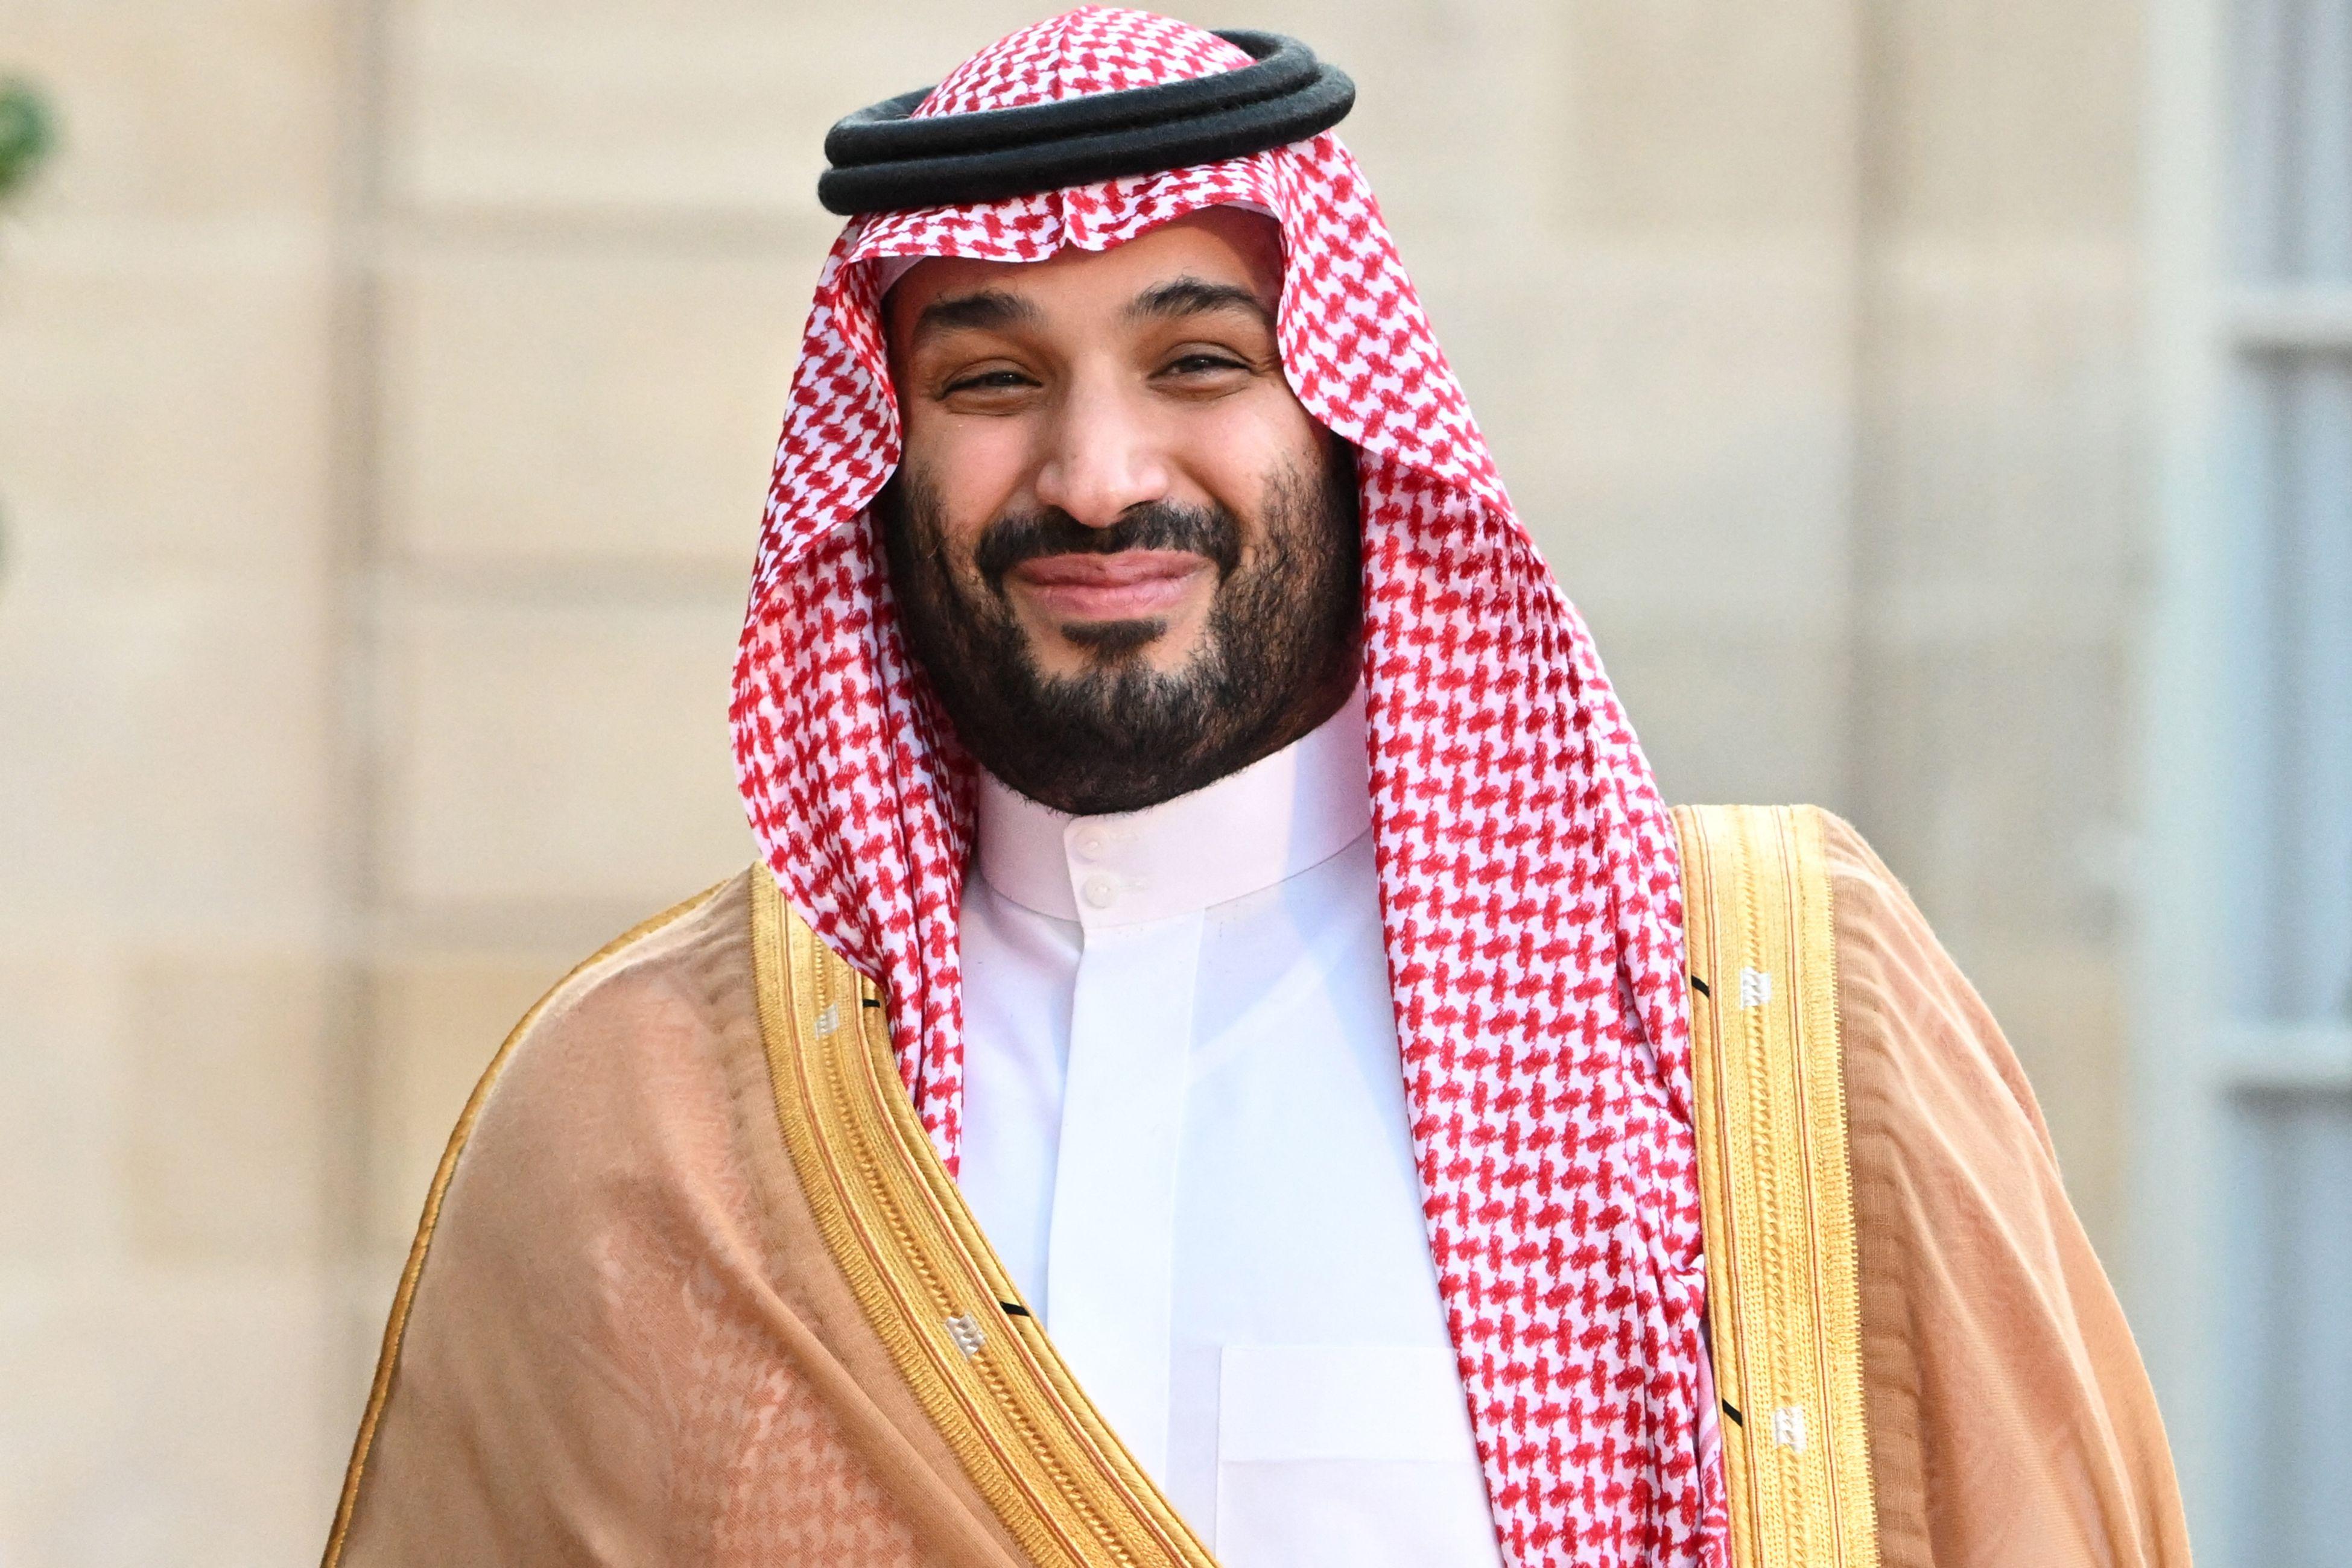 Saudi Crown Prince Mohammed bin Salman smiles as he arrives at the Elysee Palace in Paris in July.